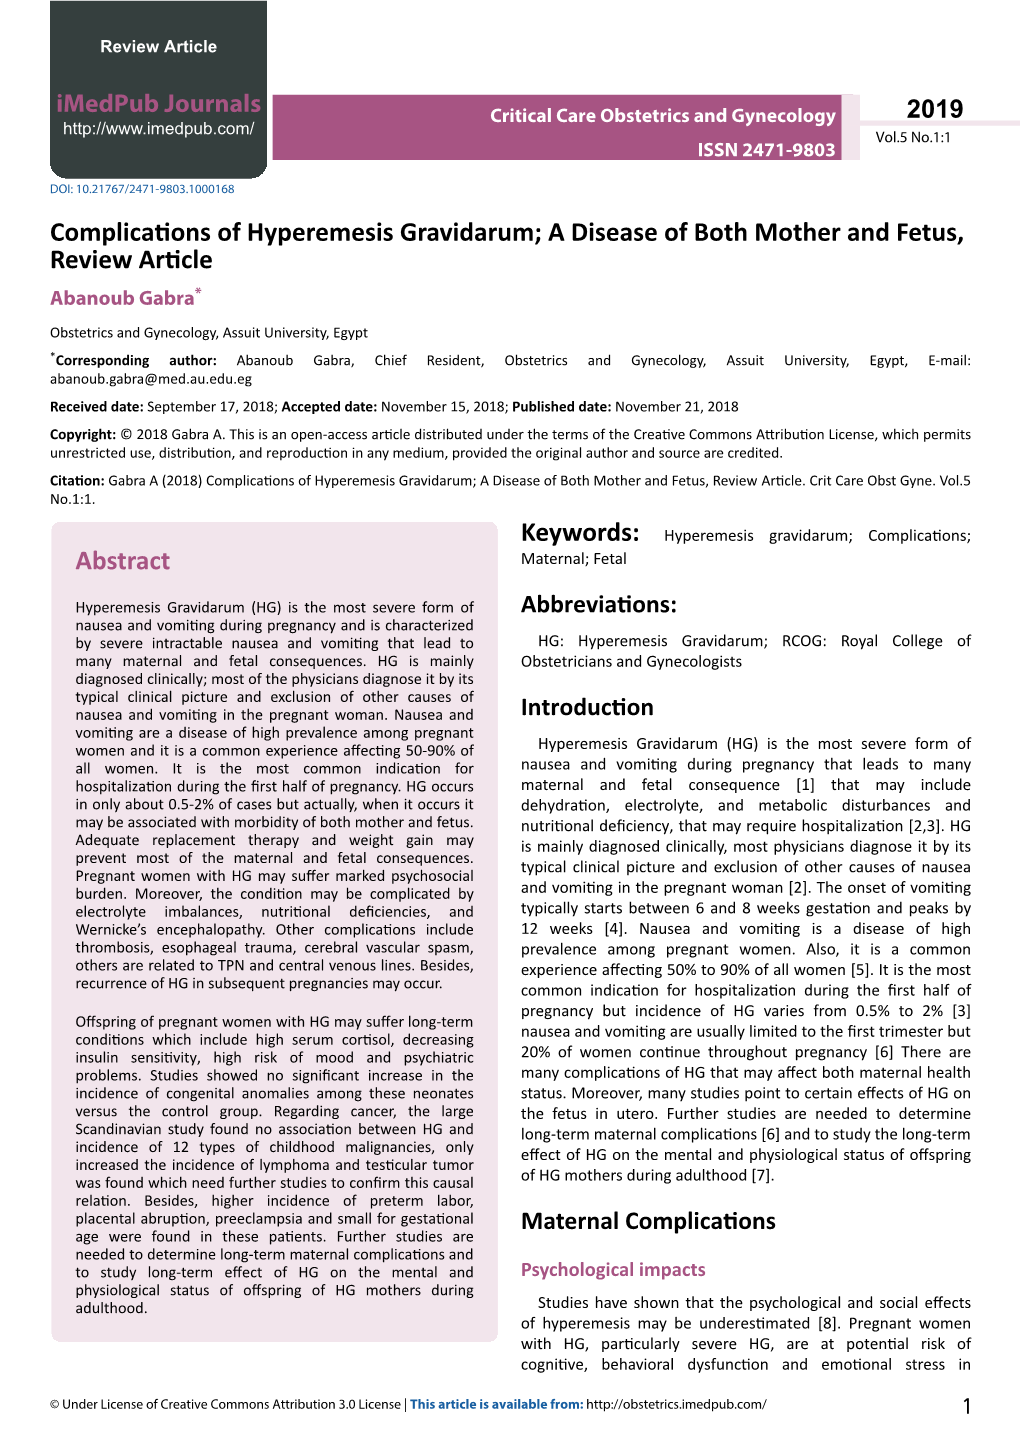 Complications of Hyperemesis Gravidarum; a Disease of Both Mother and Fetus, Review Article Abanoub Gabra*